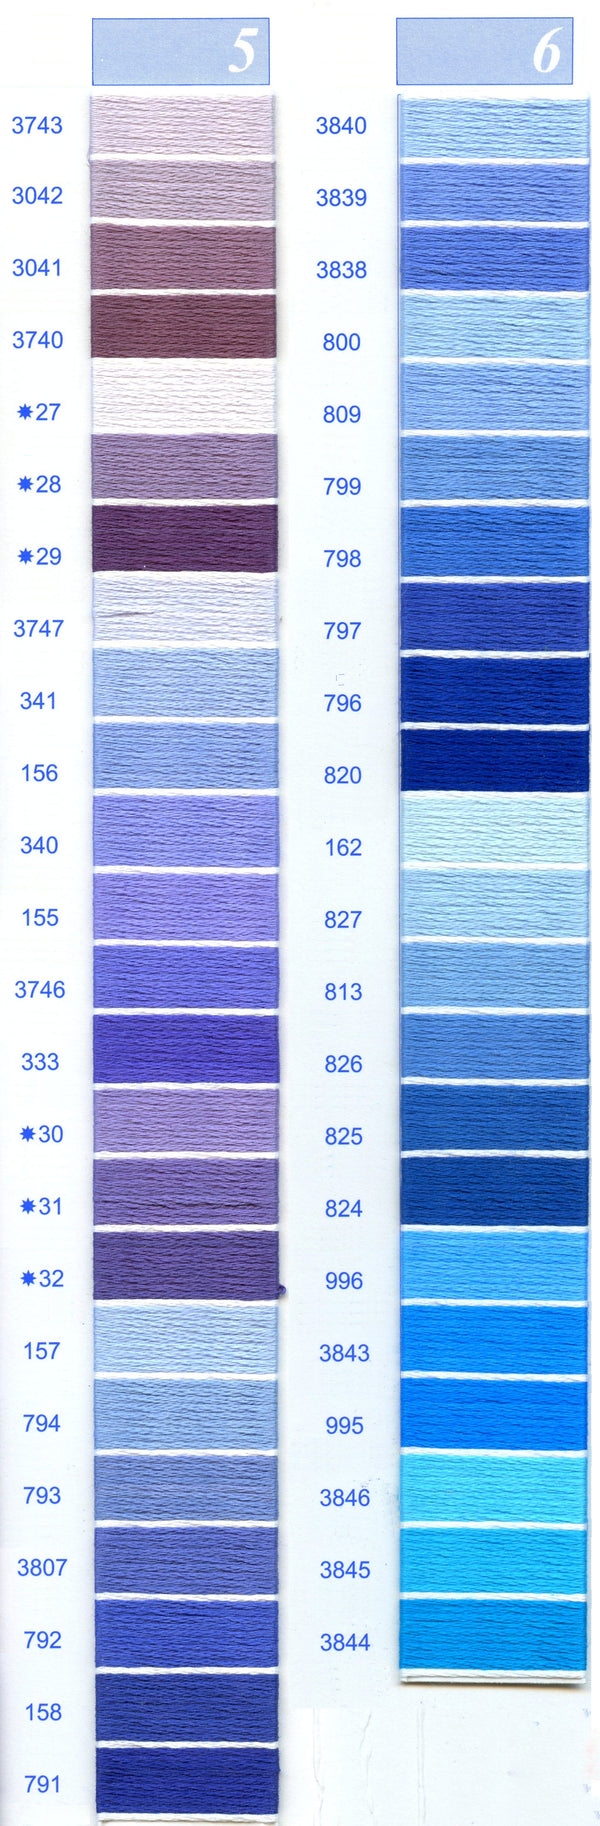 DMC Embroidery Floss Chart - Columns 5 & 6 – Wool-Tyme